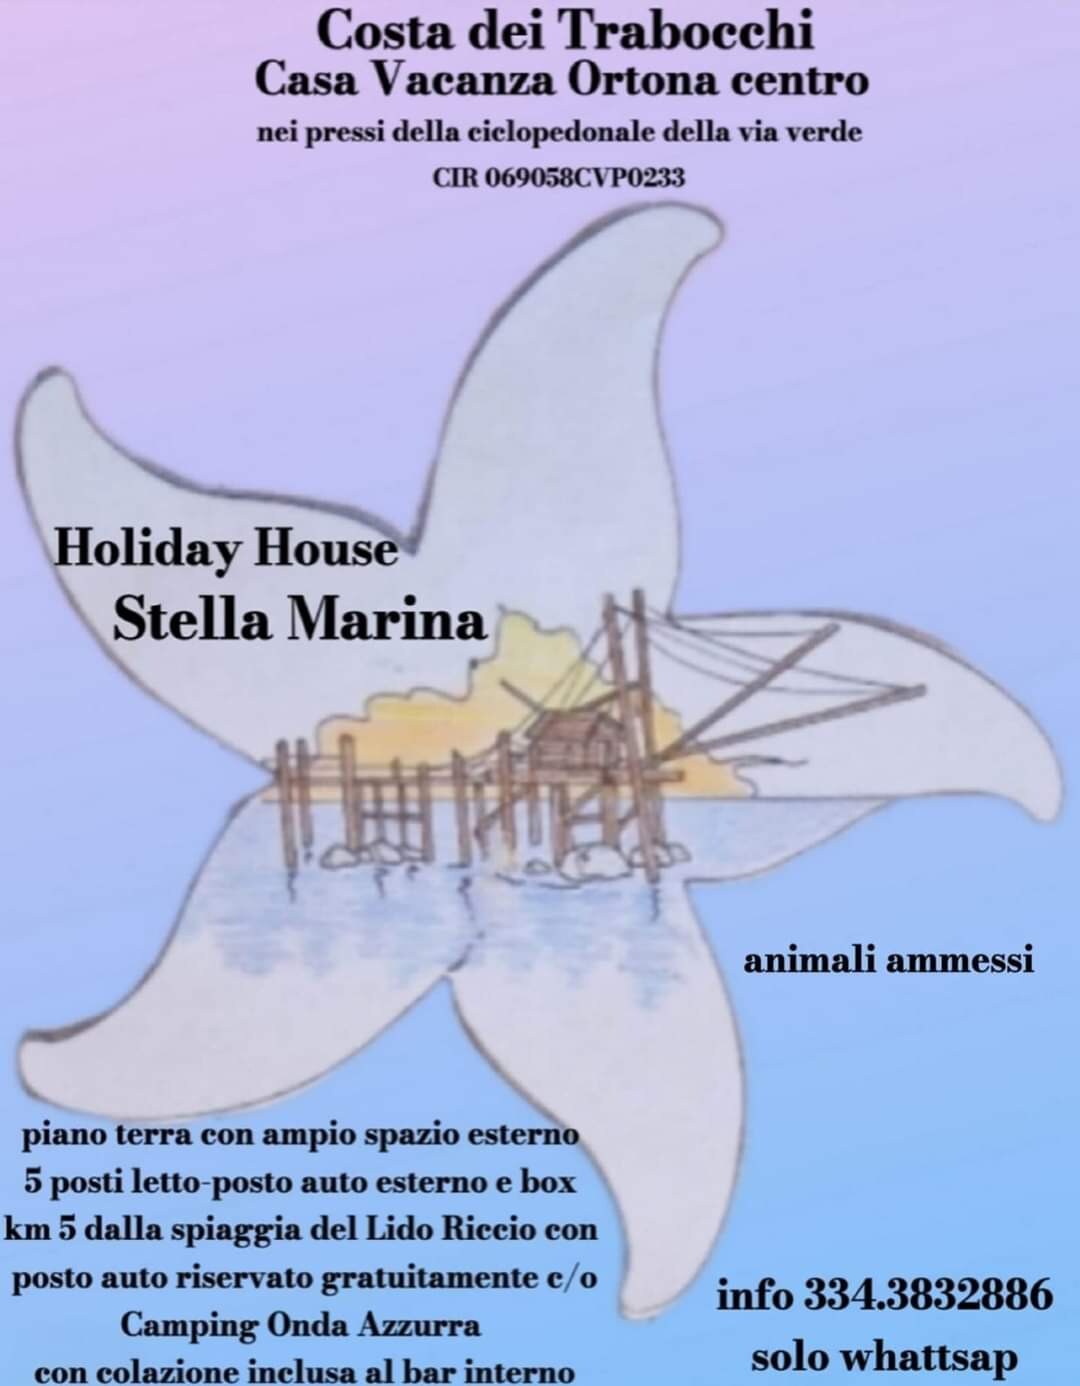 Holiday house Stella Marina